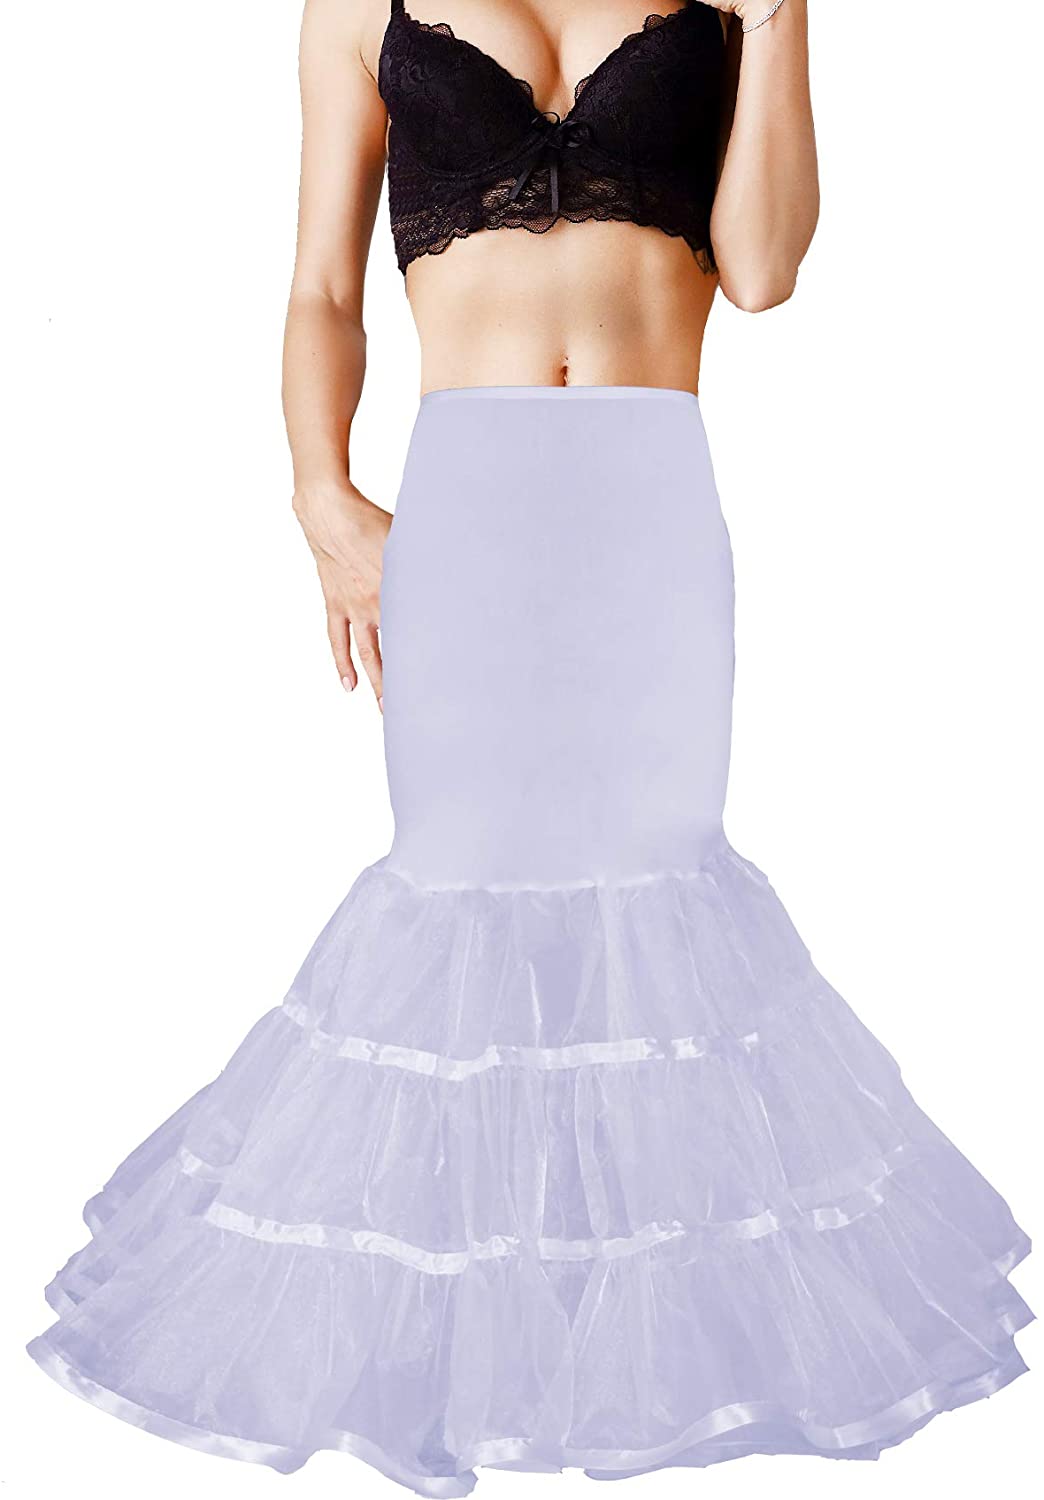 GRACE KARIN Womens Mermaid Fishtail Crinoline Petticoat Floor Length Wedding Underskirt